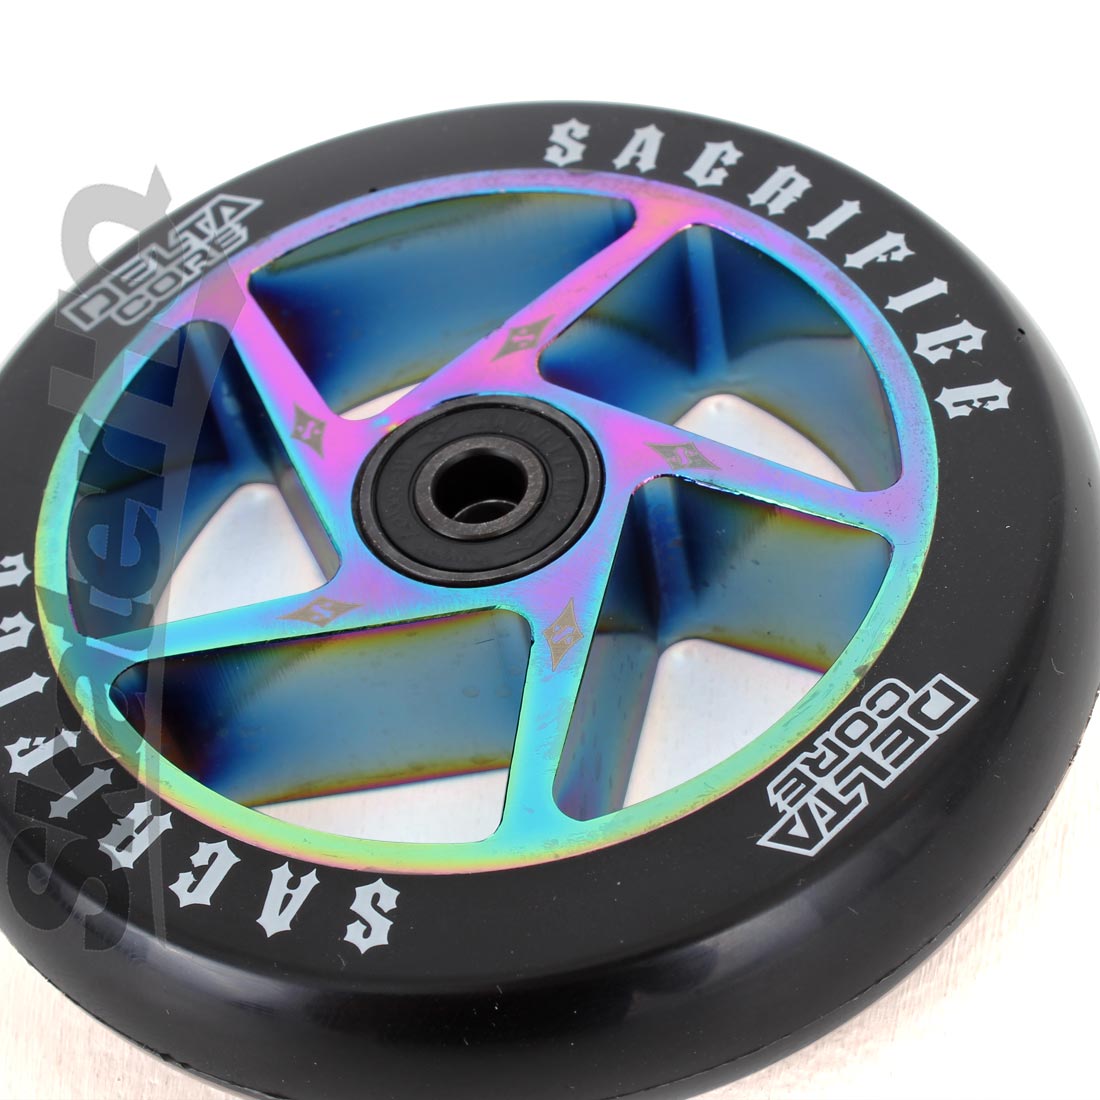 Sacrifice Delta Core 110mm Wheel - Black/Neochrome Scooter Wheels